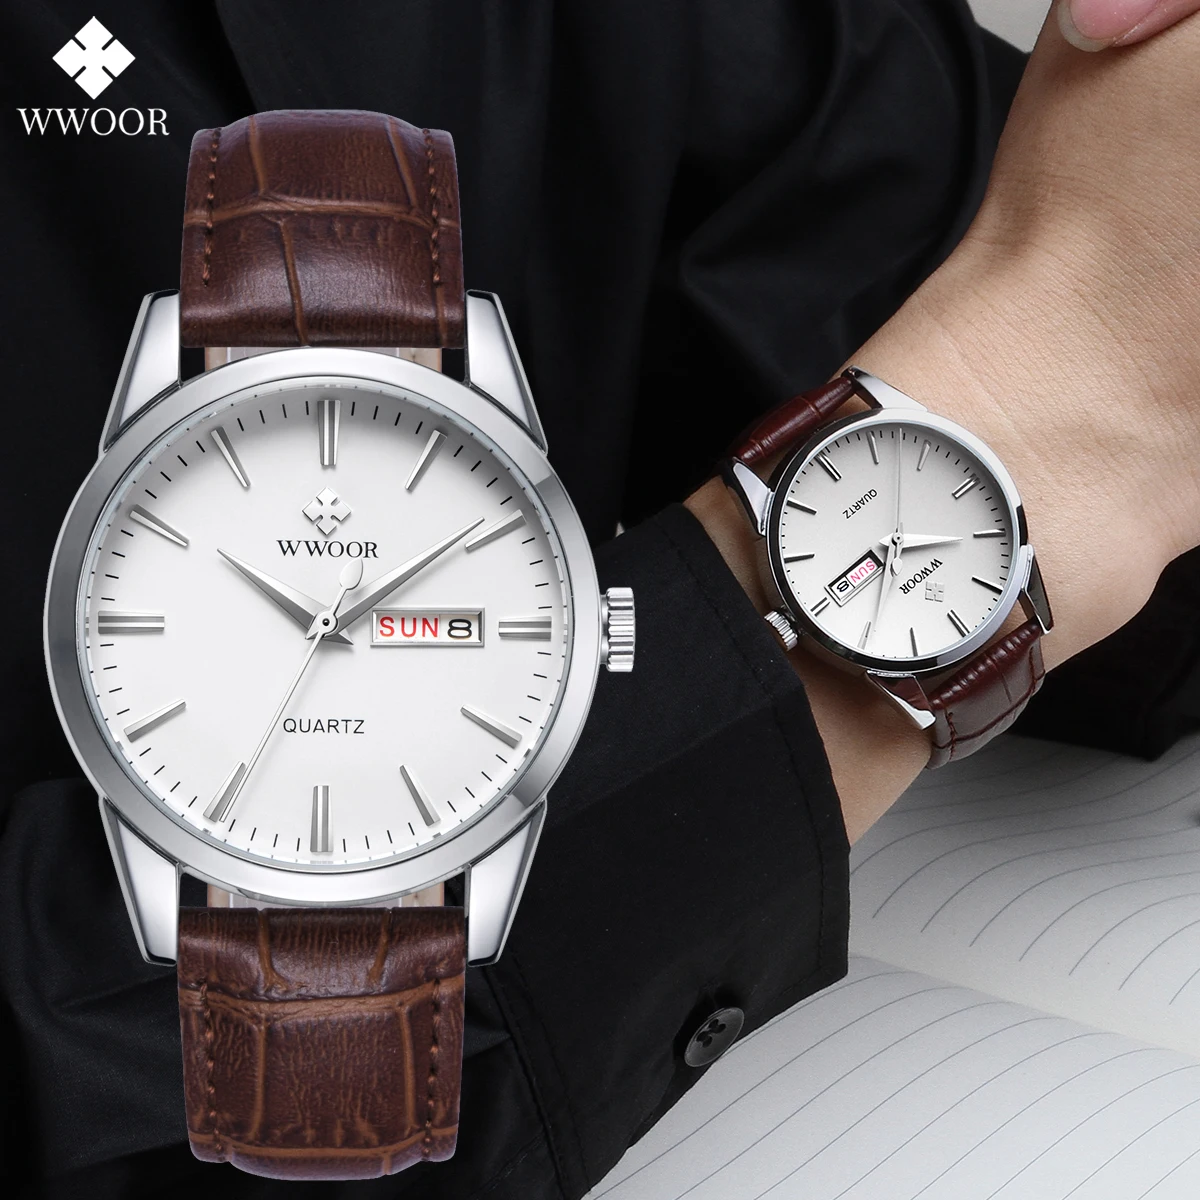 

WWOOR Top Brand Luxury Men Watch Classic Casual Leather Man Quartz Wrist Watch Waterproof Date Watch For Men Clock reloj hombre